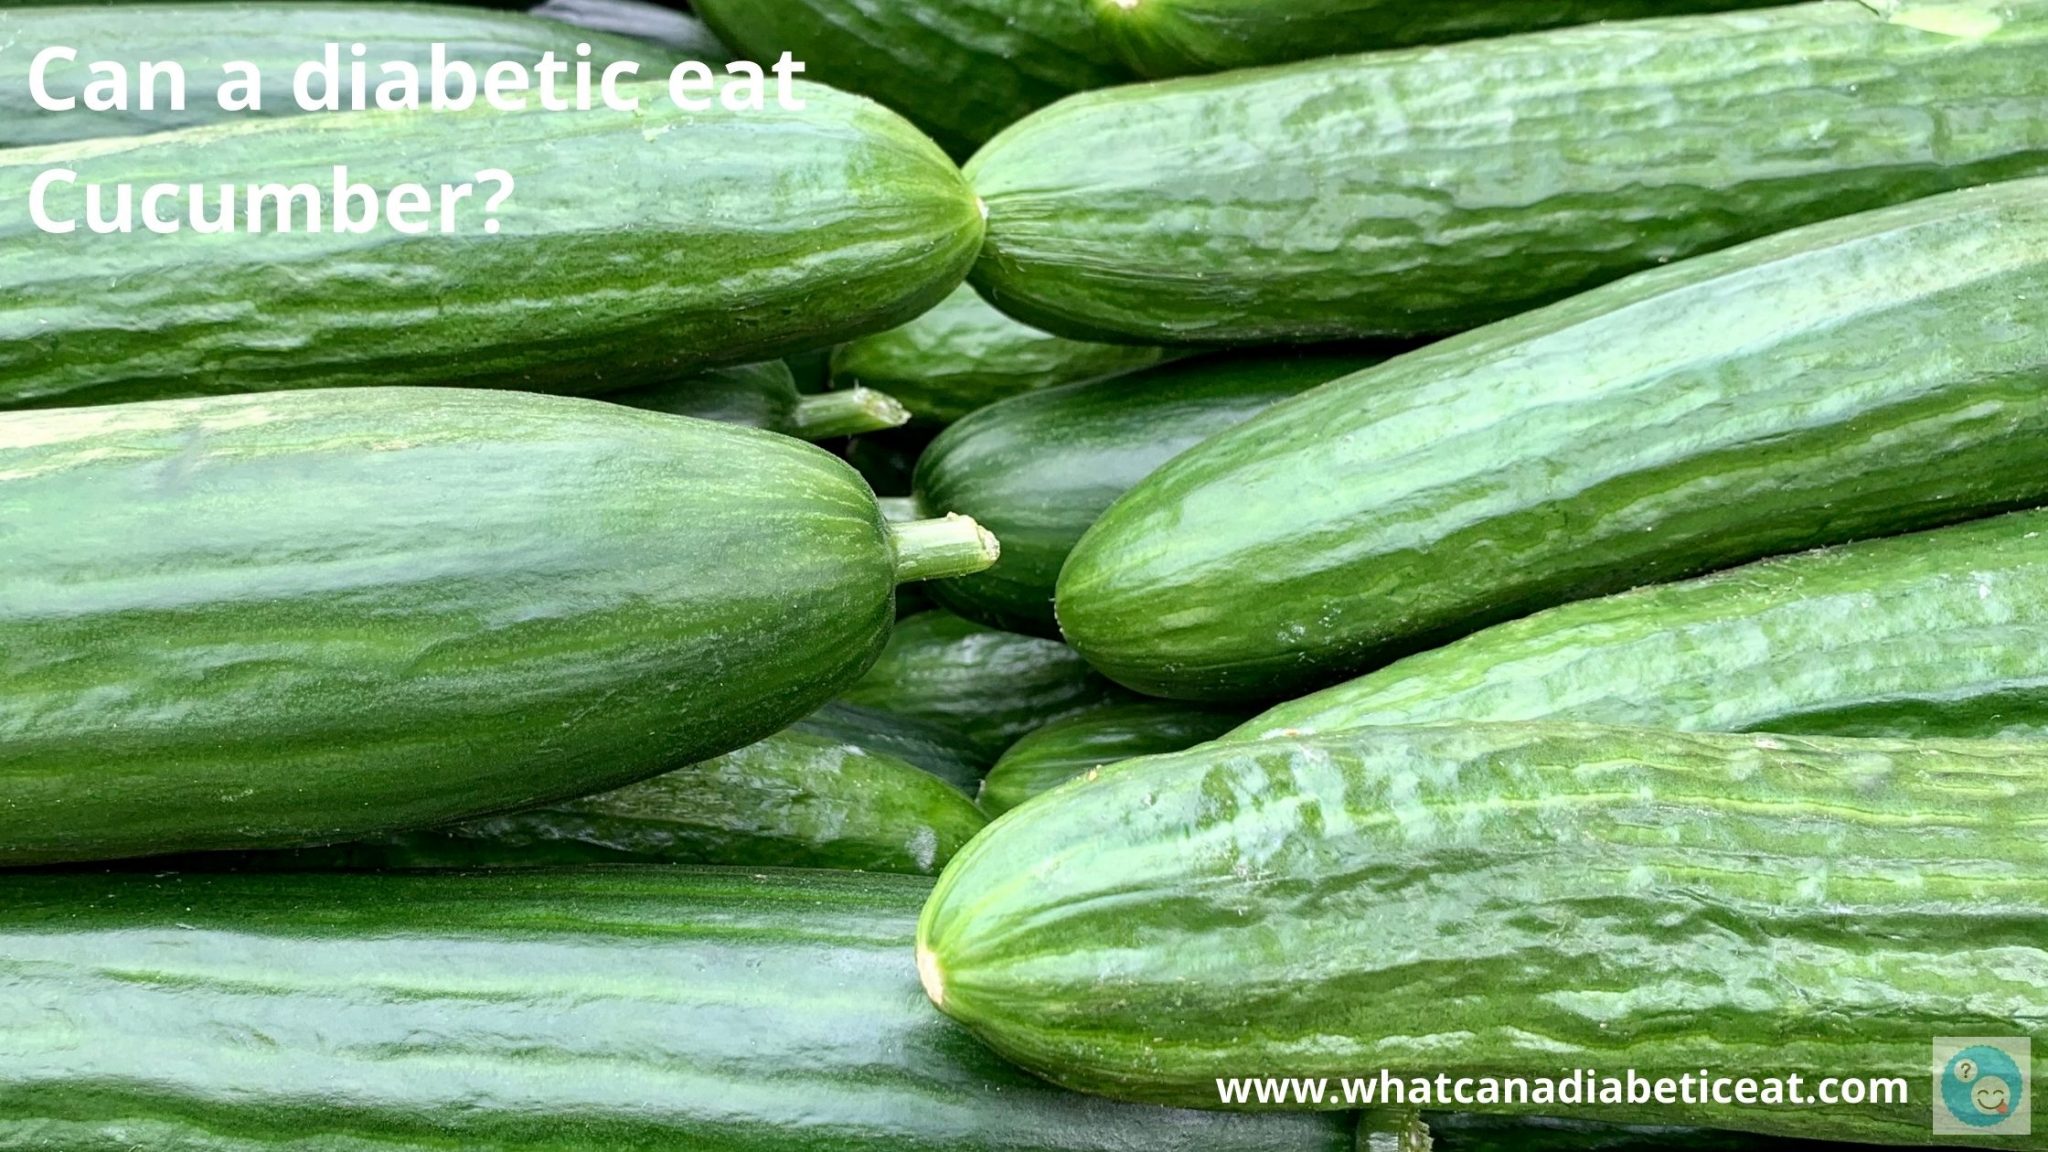 Can a diabetic eat Cucumber? Do cucumbers raise blood sugar levels?